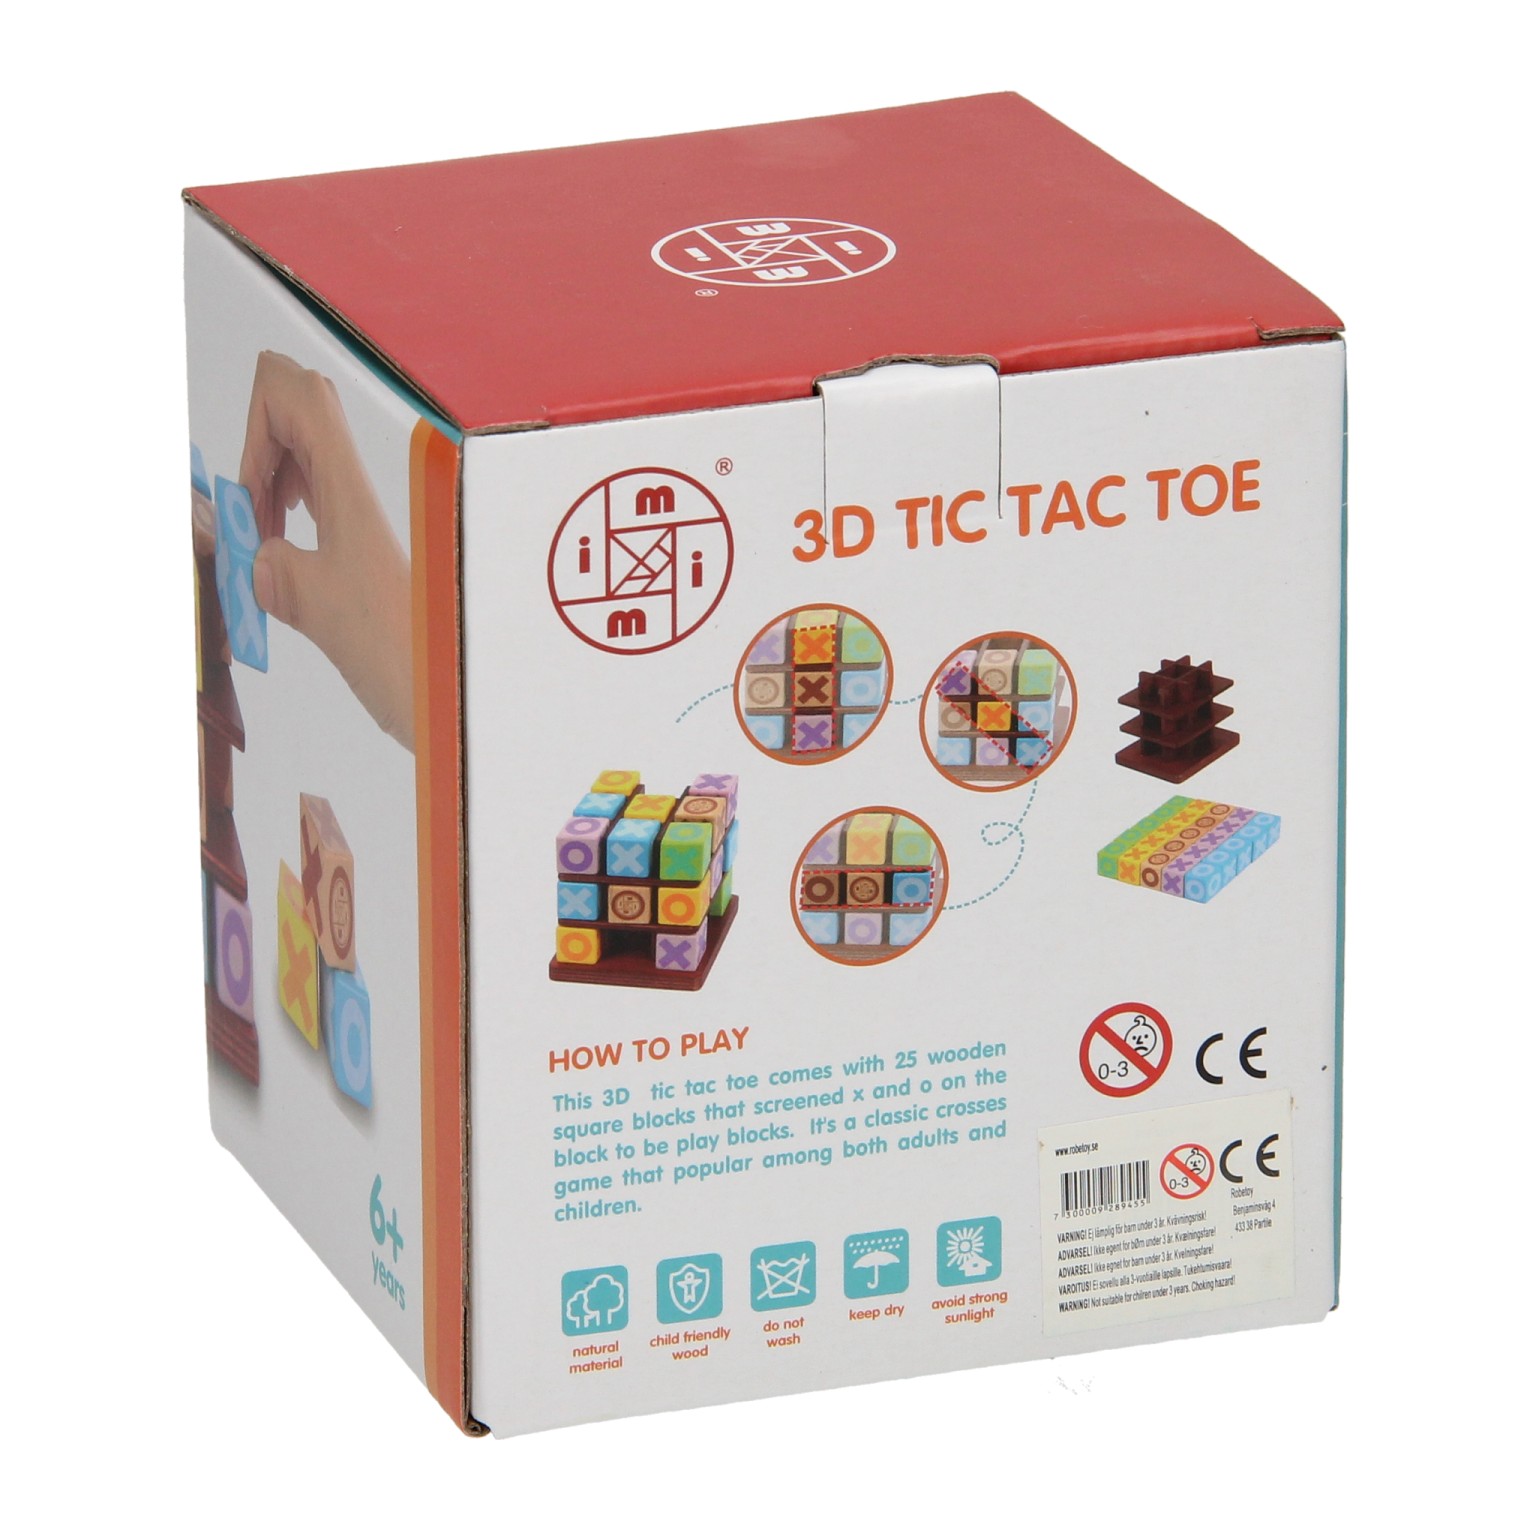 3D-Tic-Tac-Toe-Spiel aus Holz, 26-teilig.